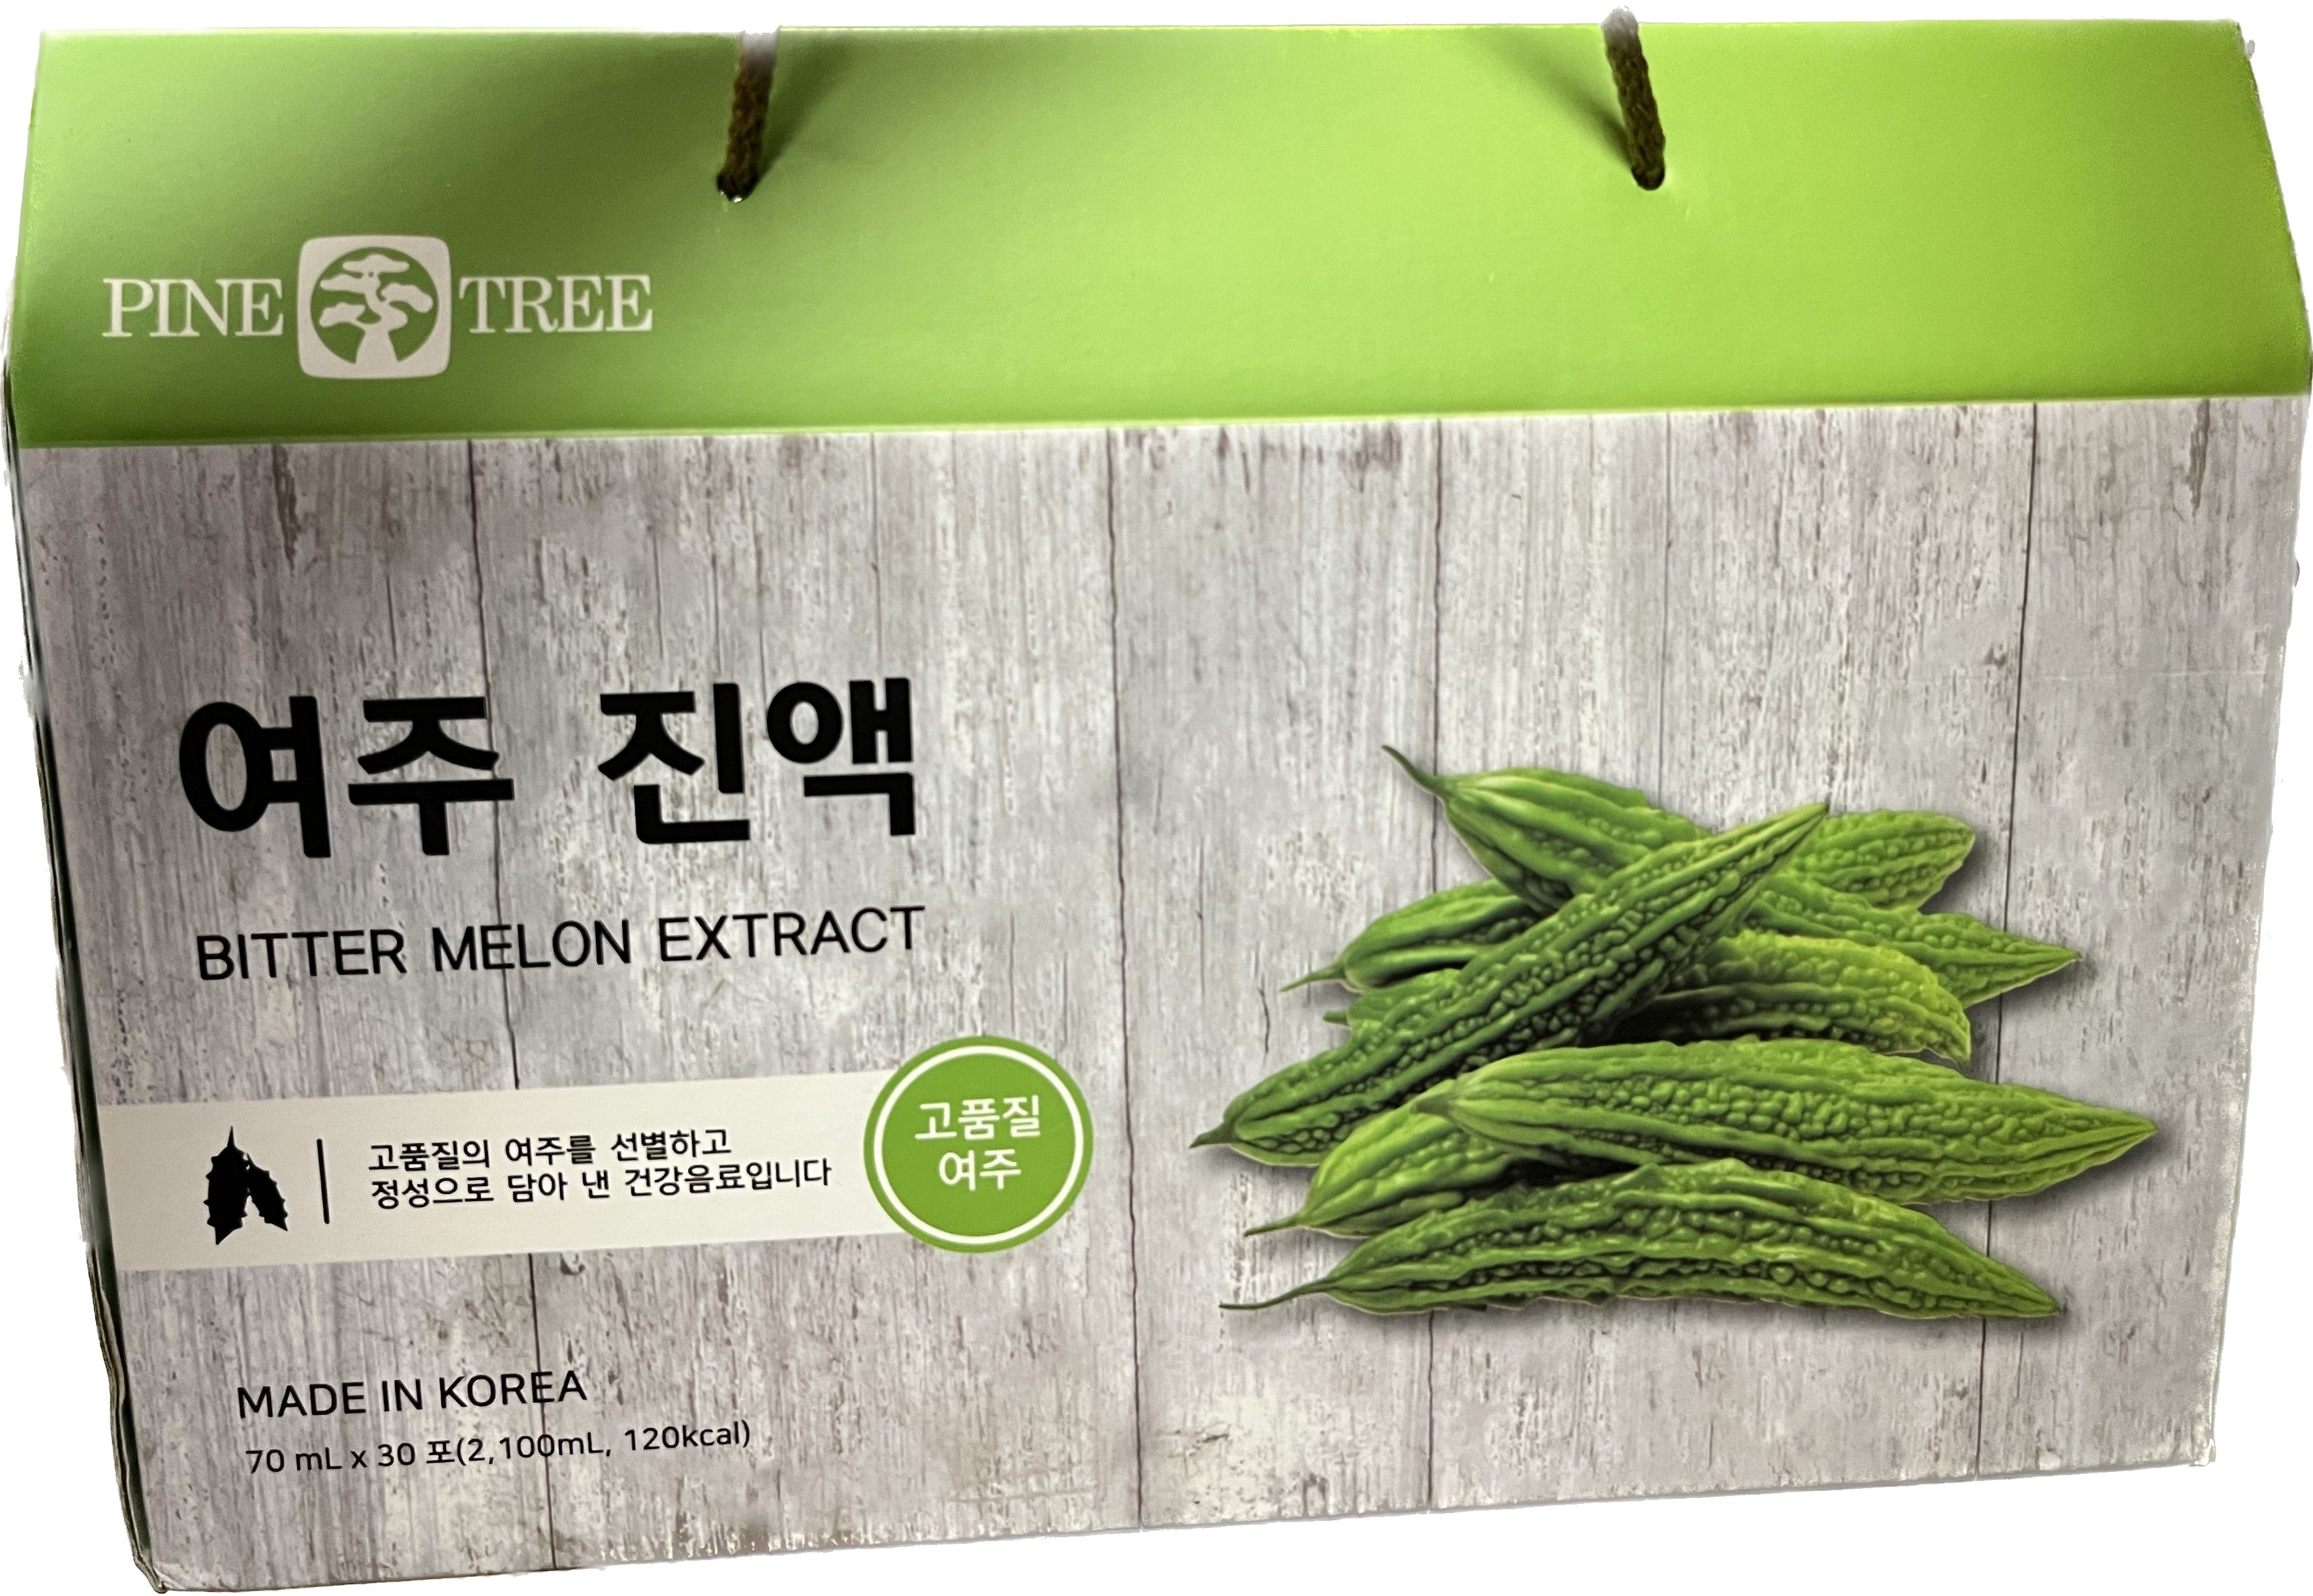 Pine Tree Brand- Bitter Melon Extract 70mL x 30-1